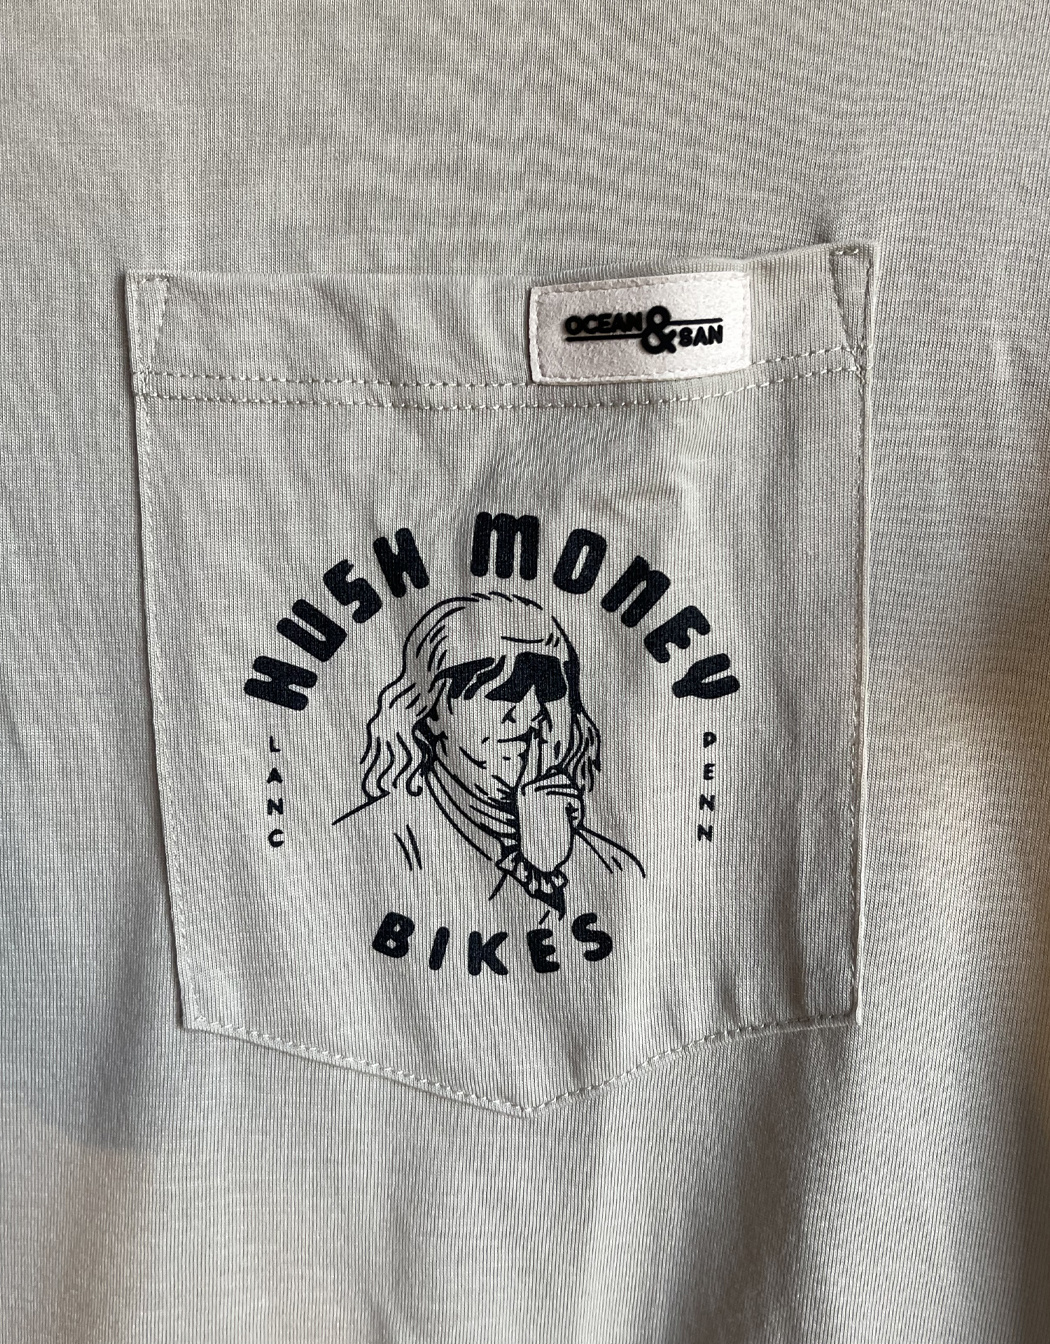 Hush Money Bikes x NotChas Bottle - Hush Money Bikes